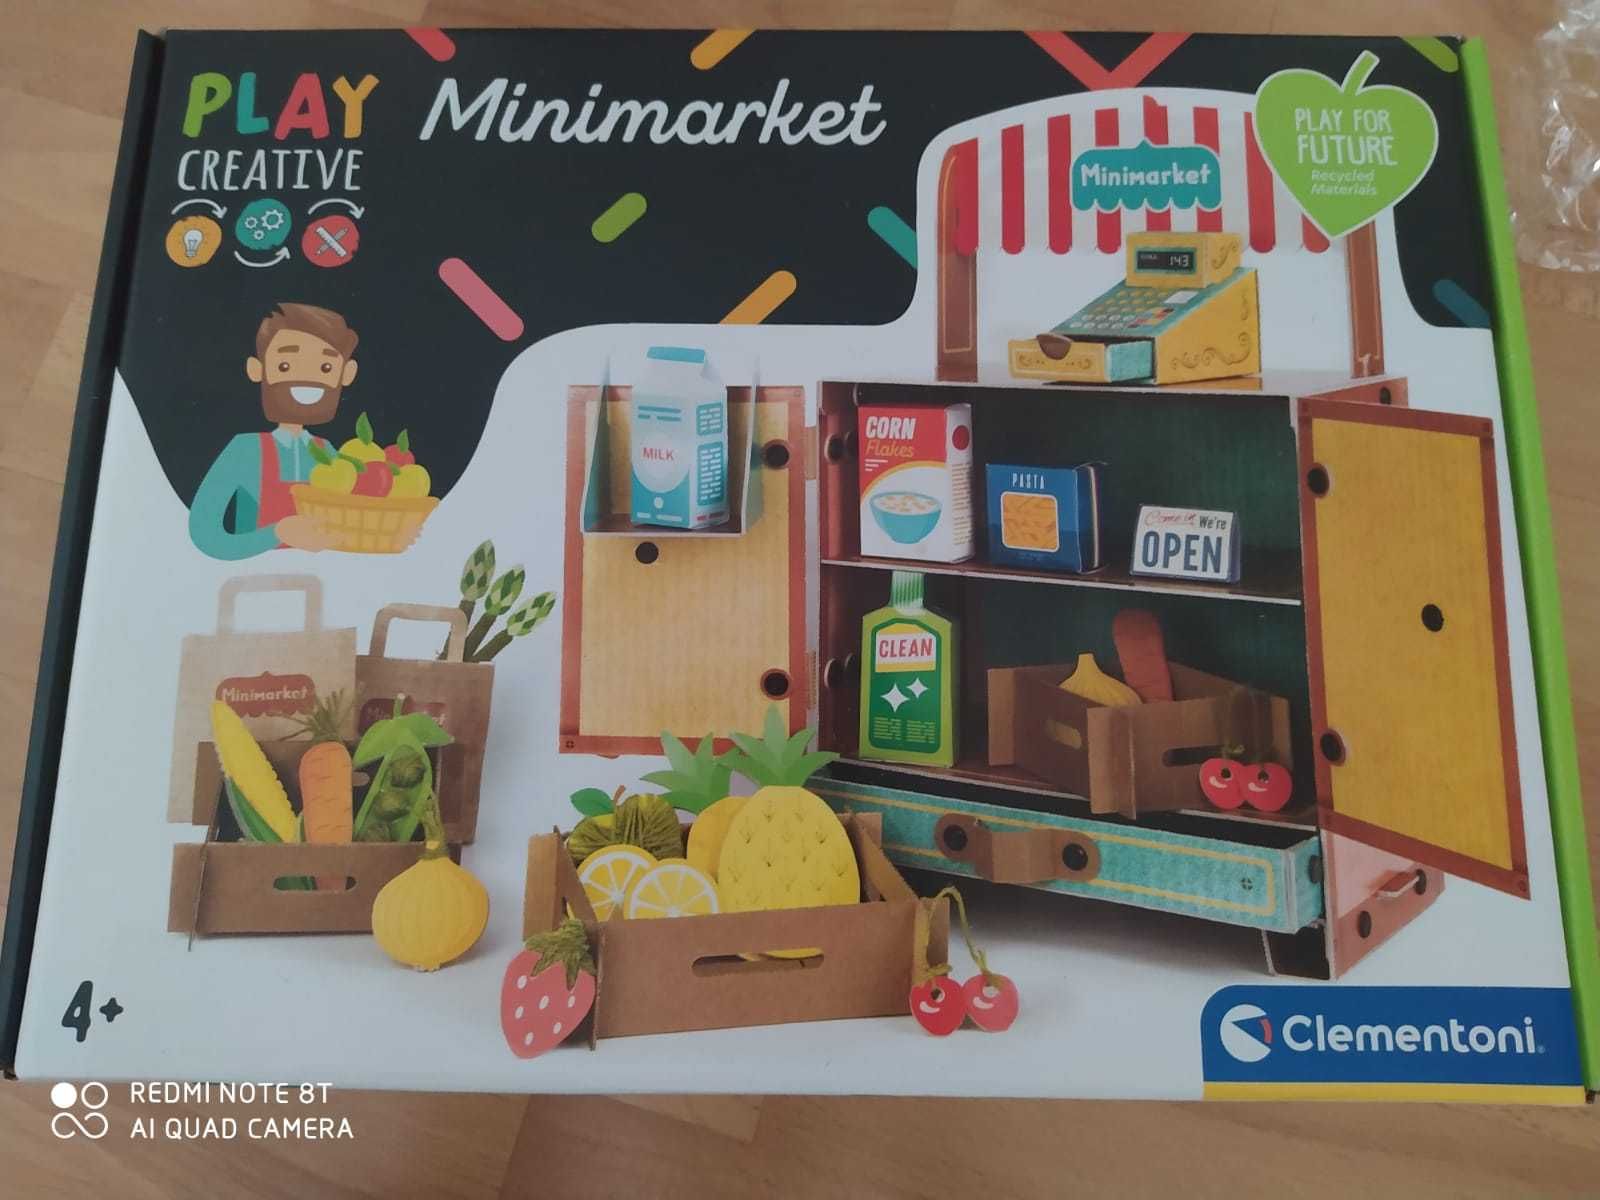 NOWE!!! Minimarket 4+ firmy Clementoni